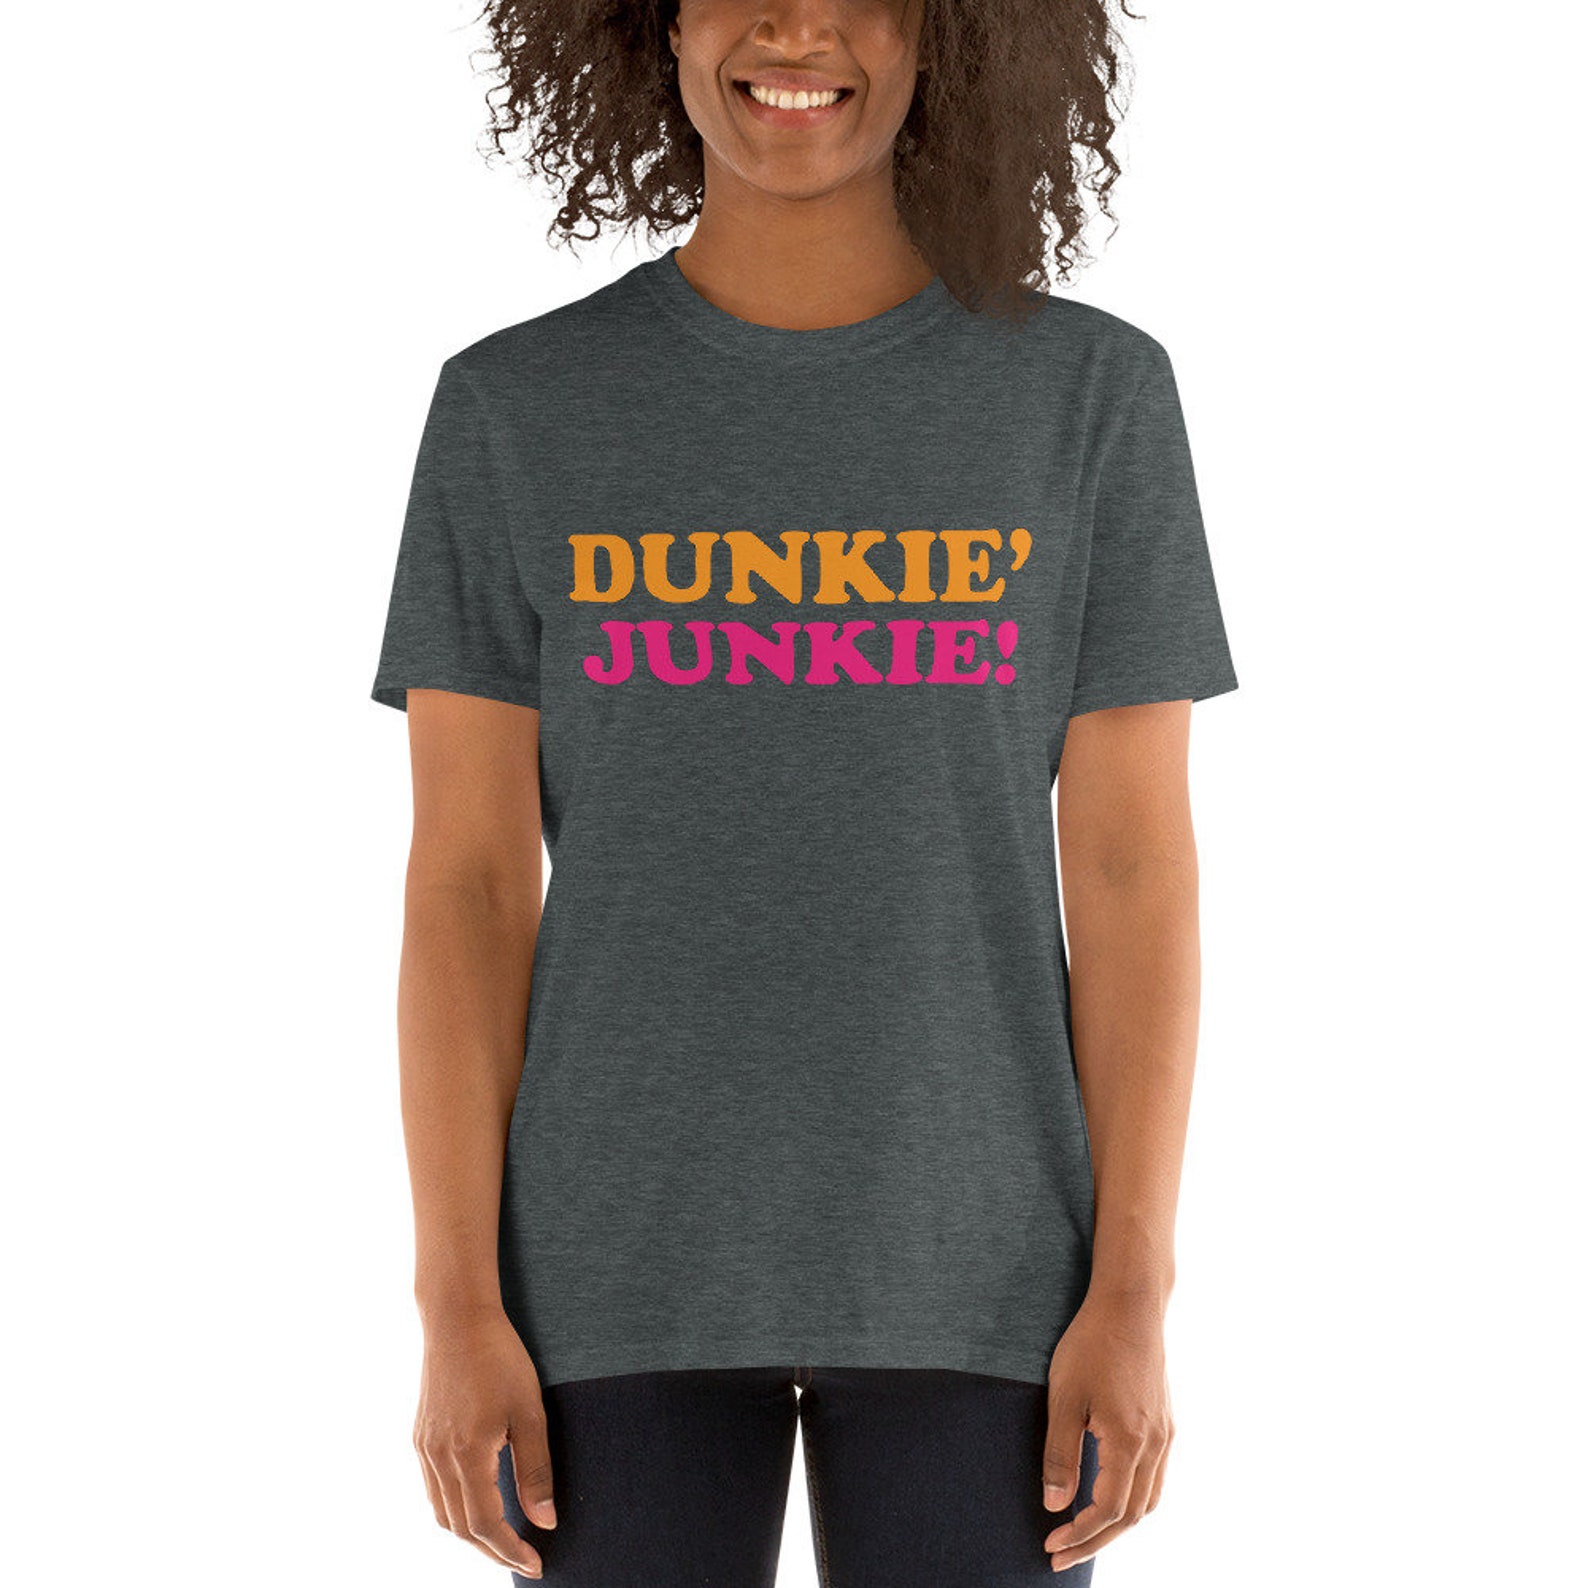 Dunkie Junkie short sleeve T-Shirt Dunkin donuts Coffee | Etsy